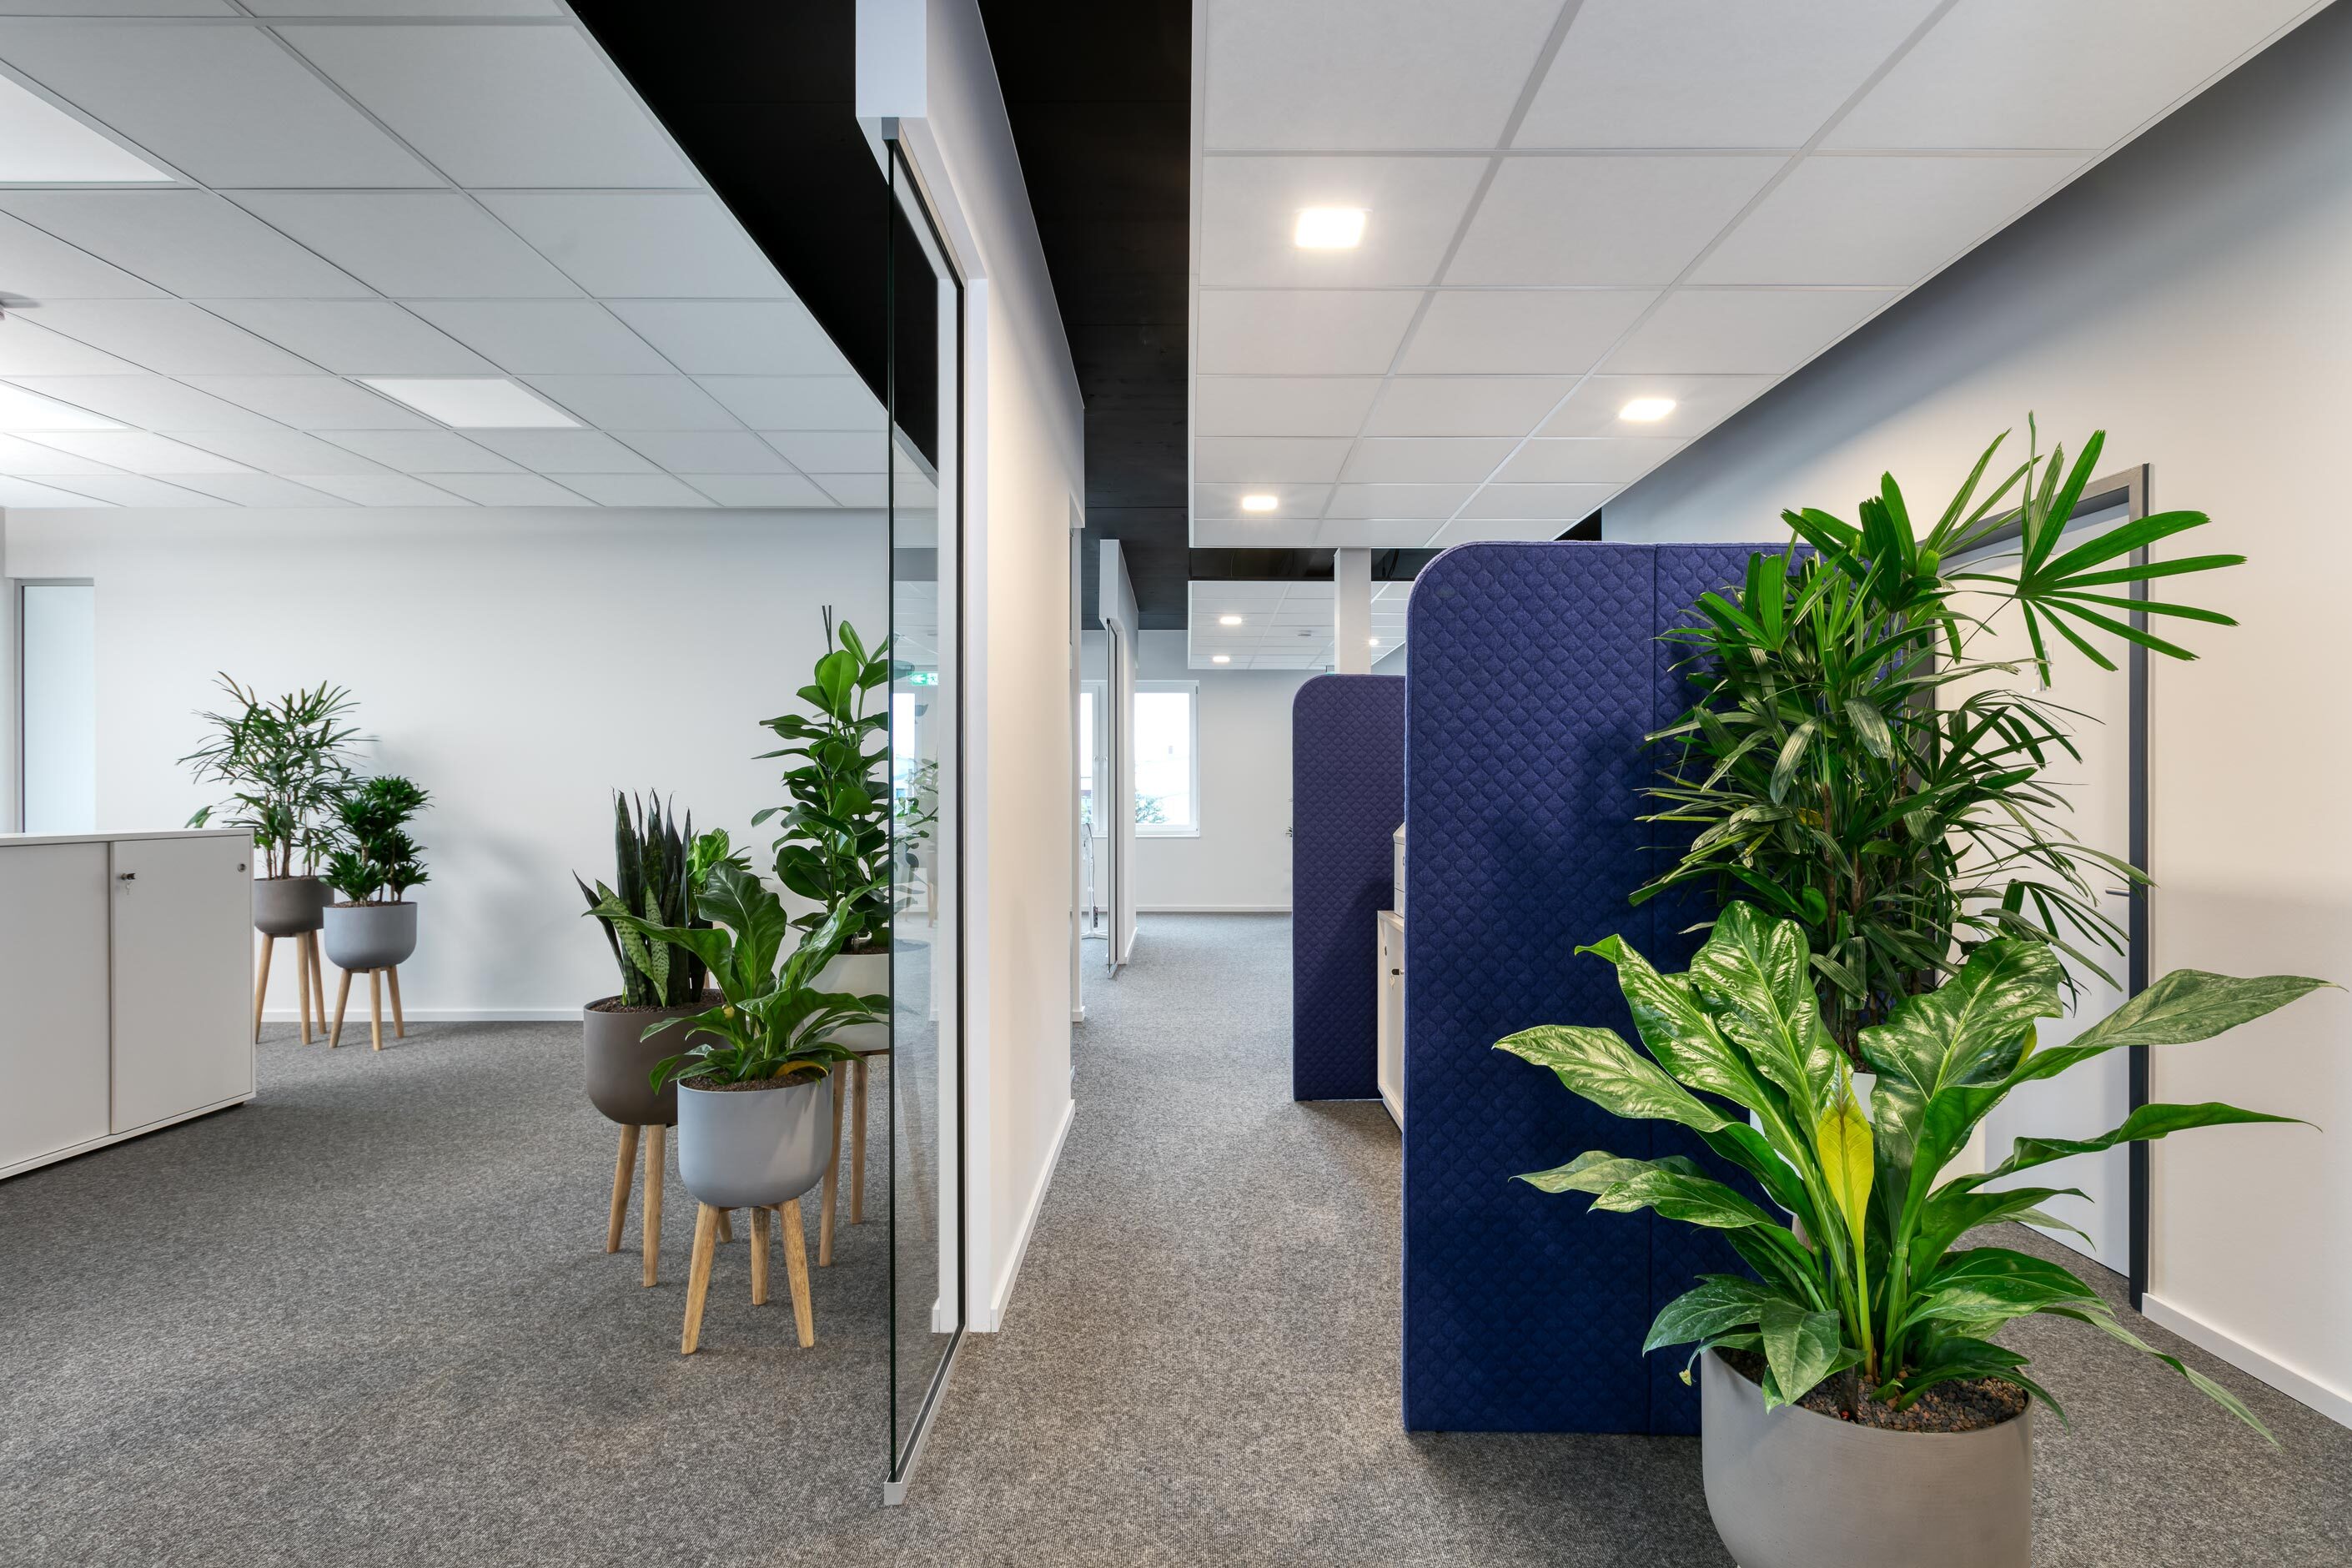 Nussbaum Medien Ettlingen │ office furnishings with feco │ modern workplaces